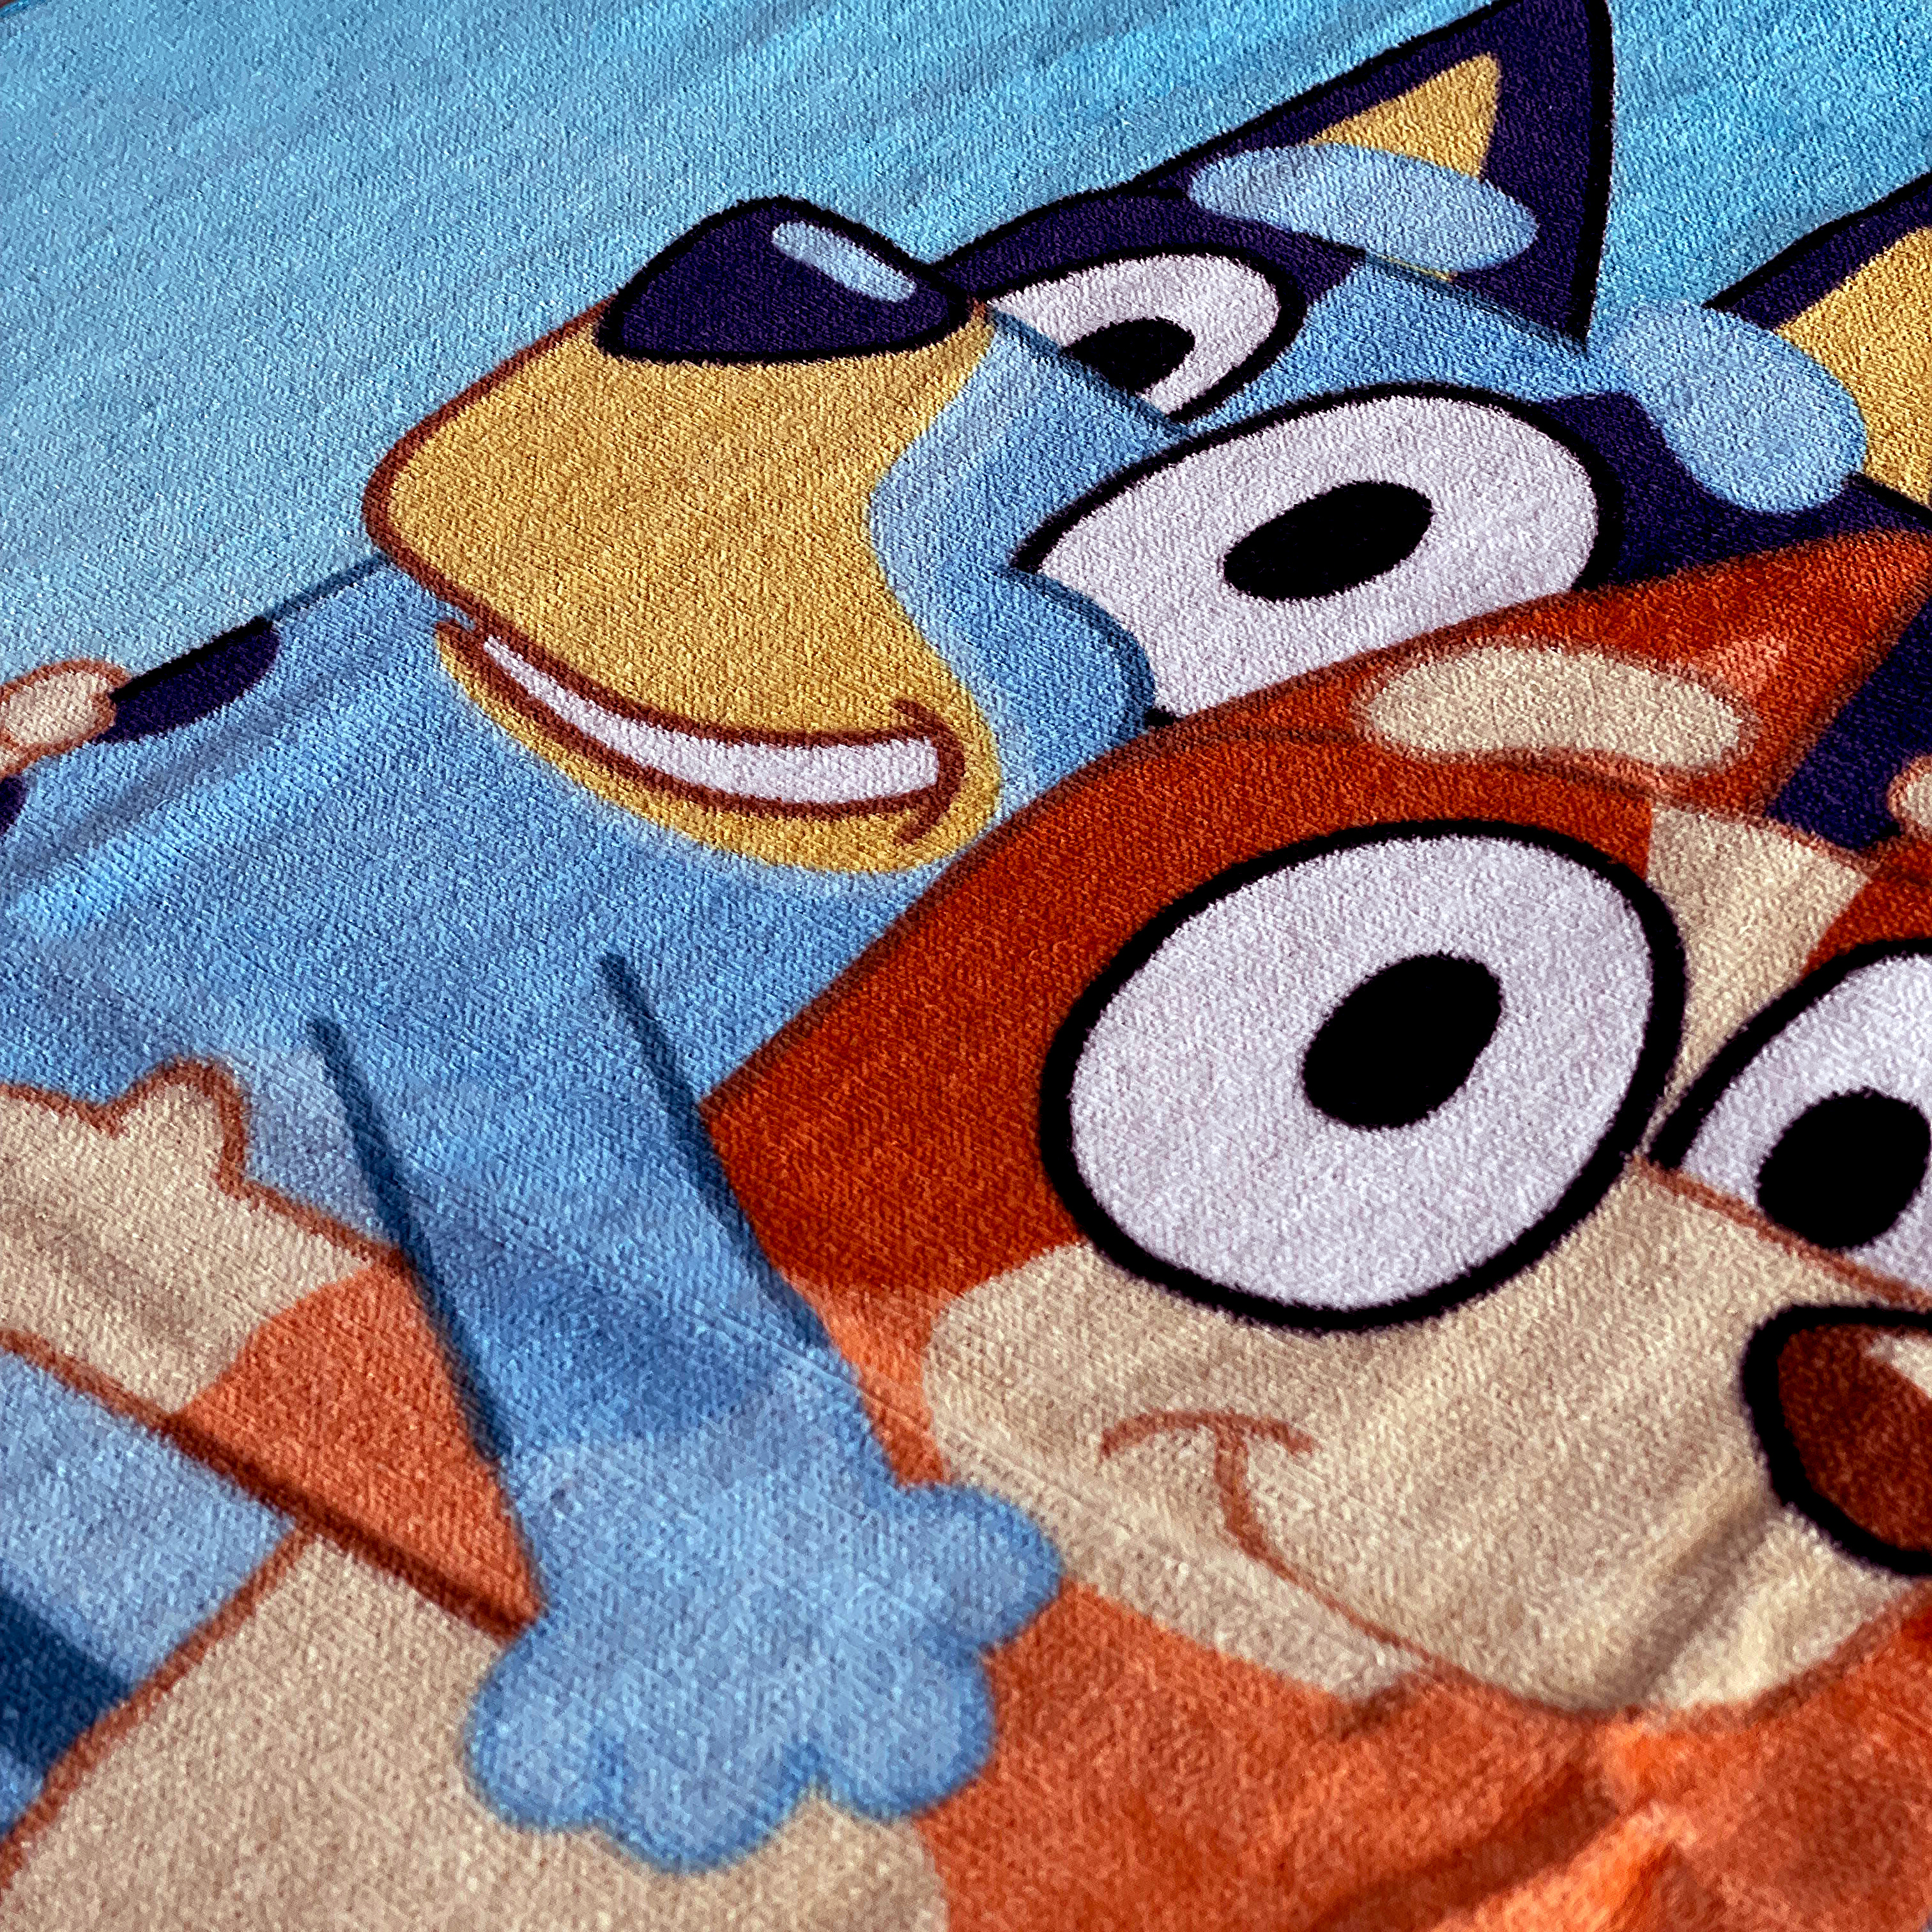 Bluey & Bingo Printed Beach Towel